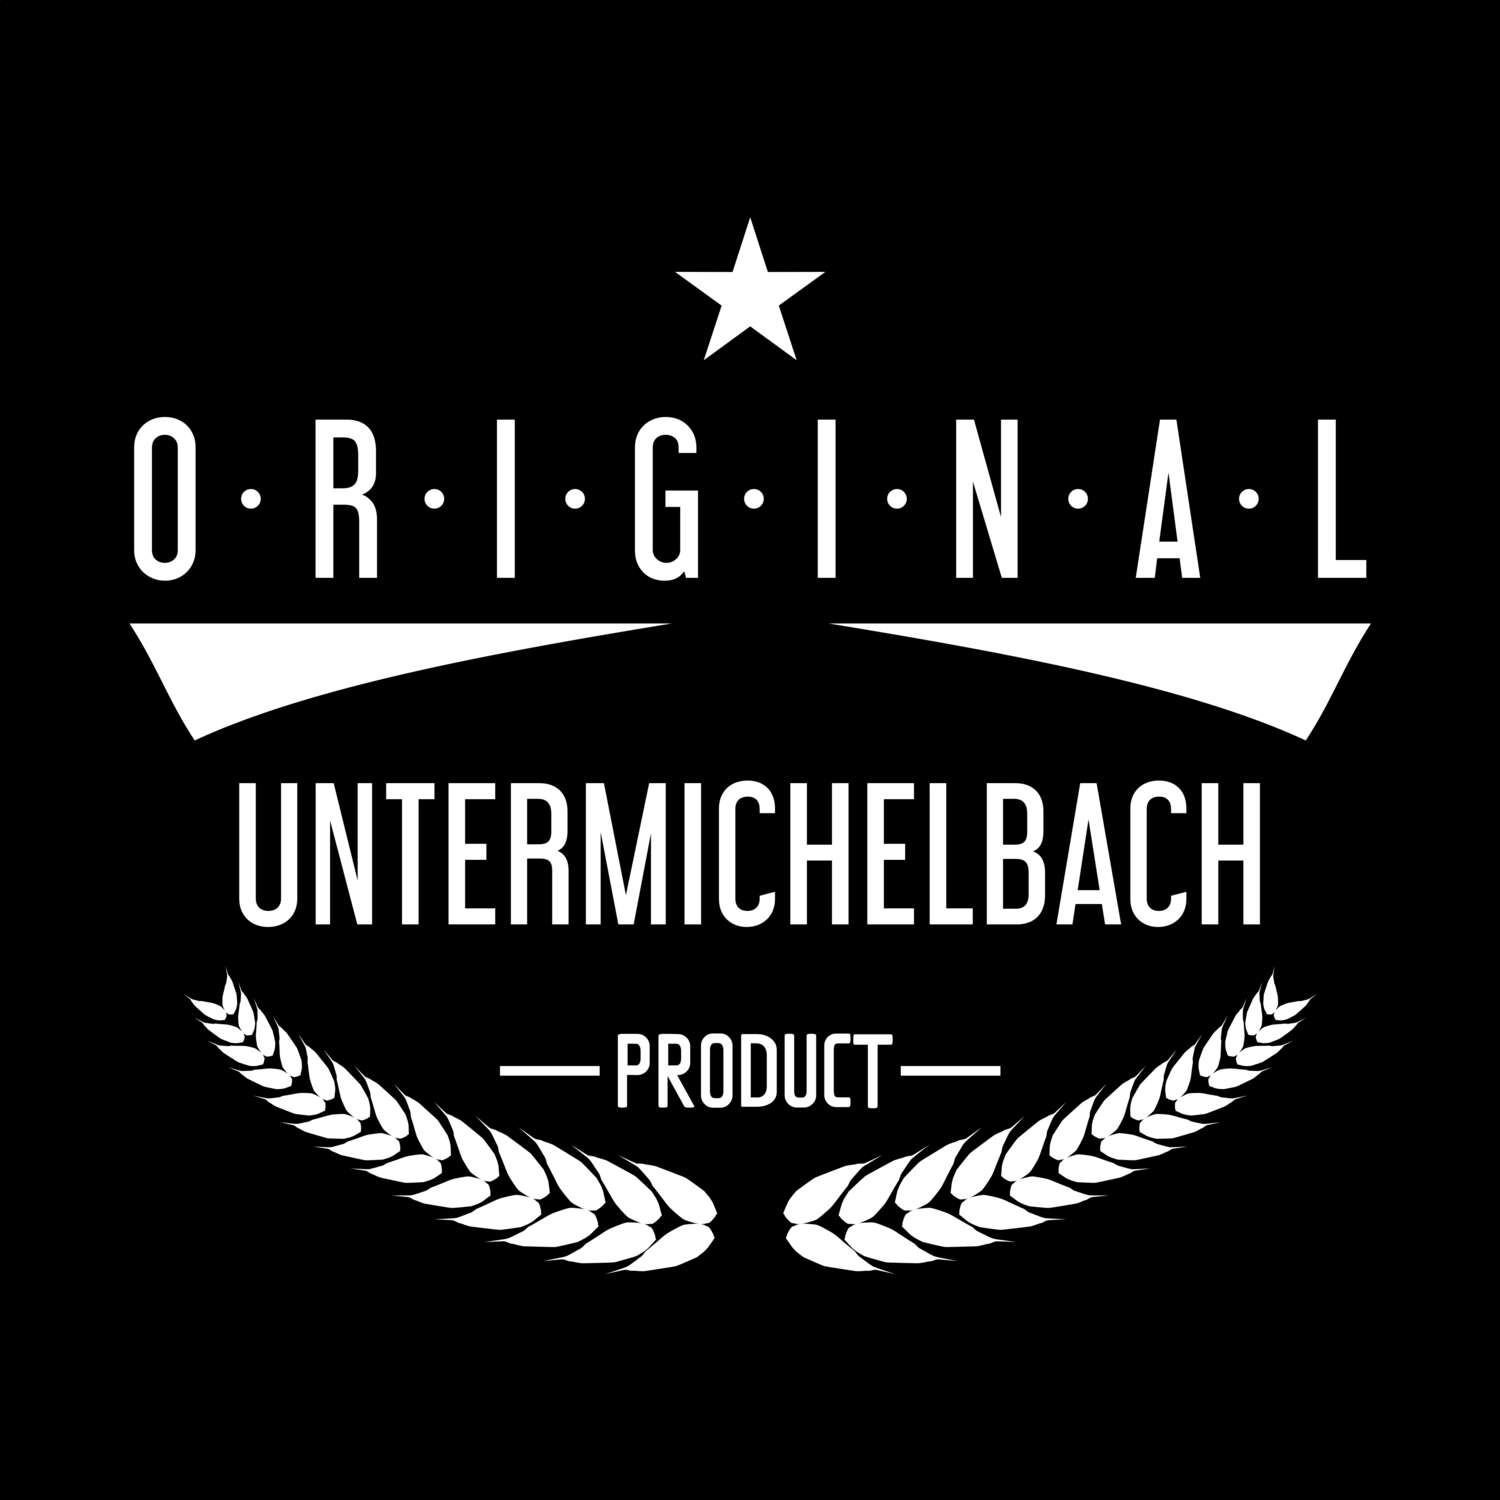 Untermichelbach T-Shirt »Original Product«